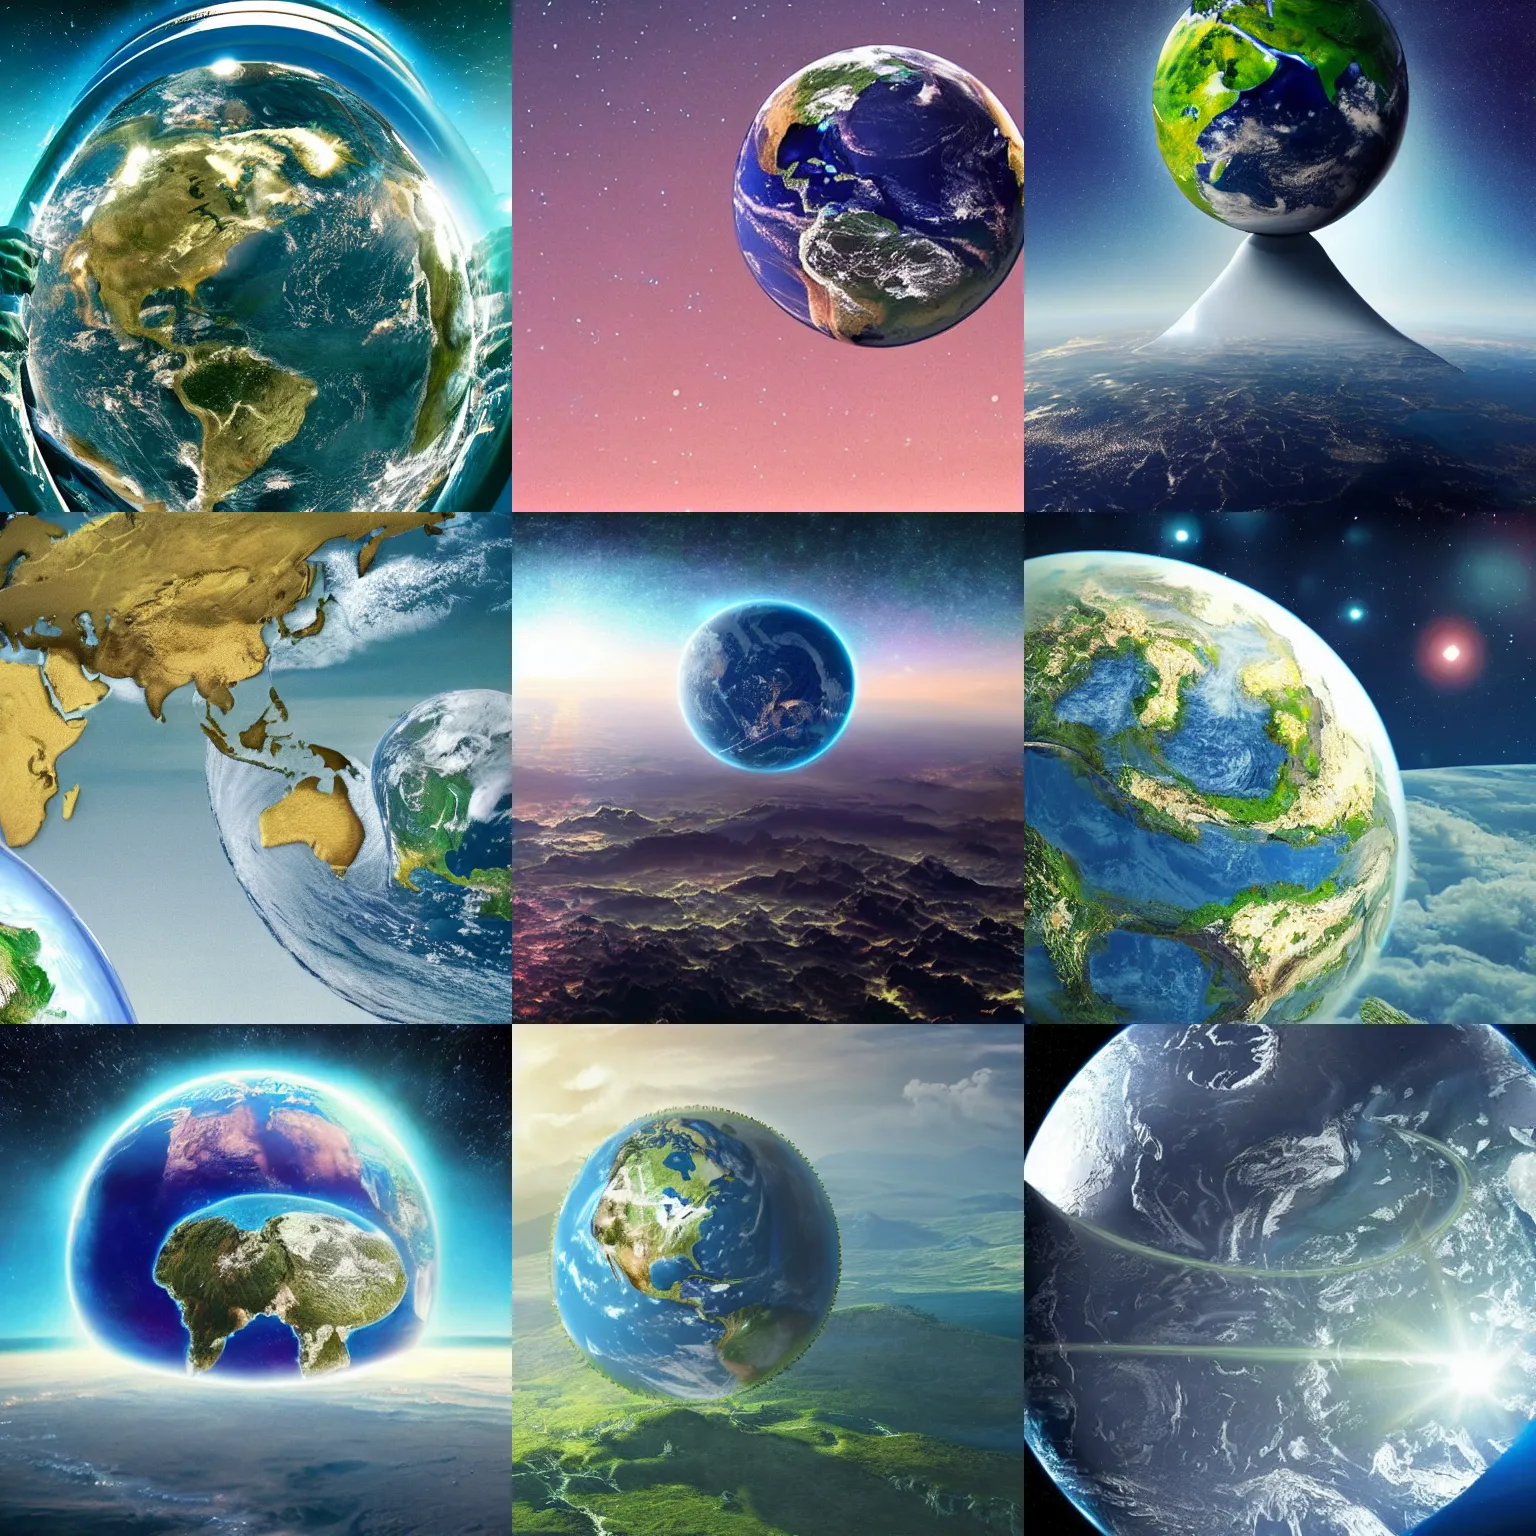 Prompt: earth as a futuristic utopia, abundance, life, beauty, movie still